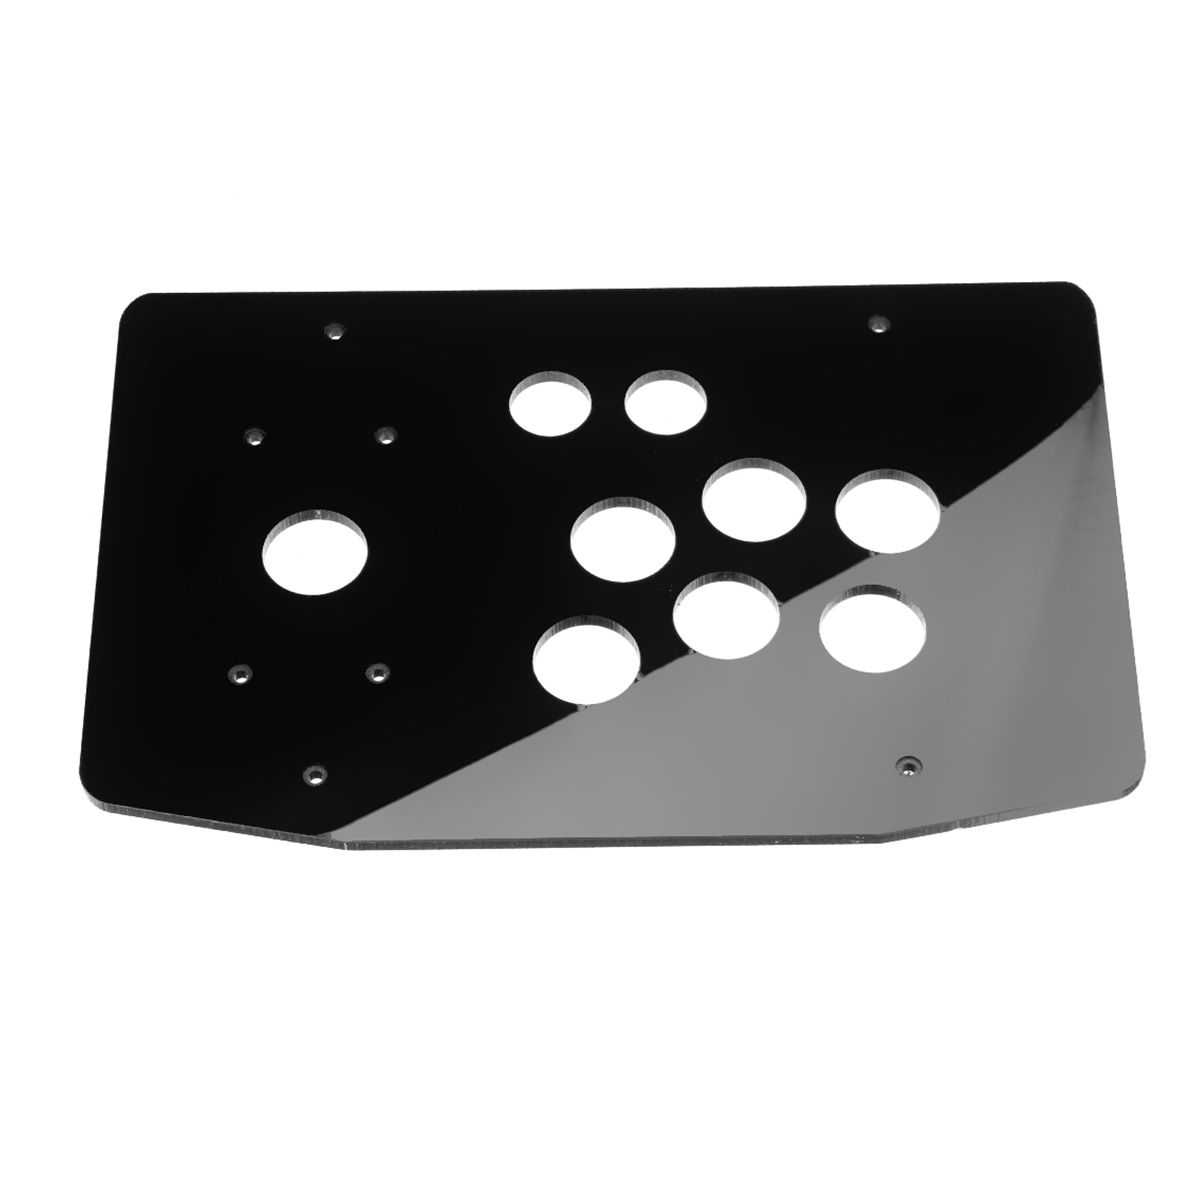 DIY Clear Black Acrylic Panel Case Sturdy Construction for Arcade Joystick Game Controller 11